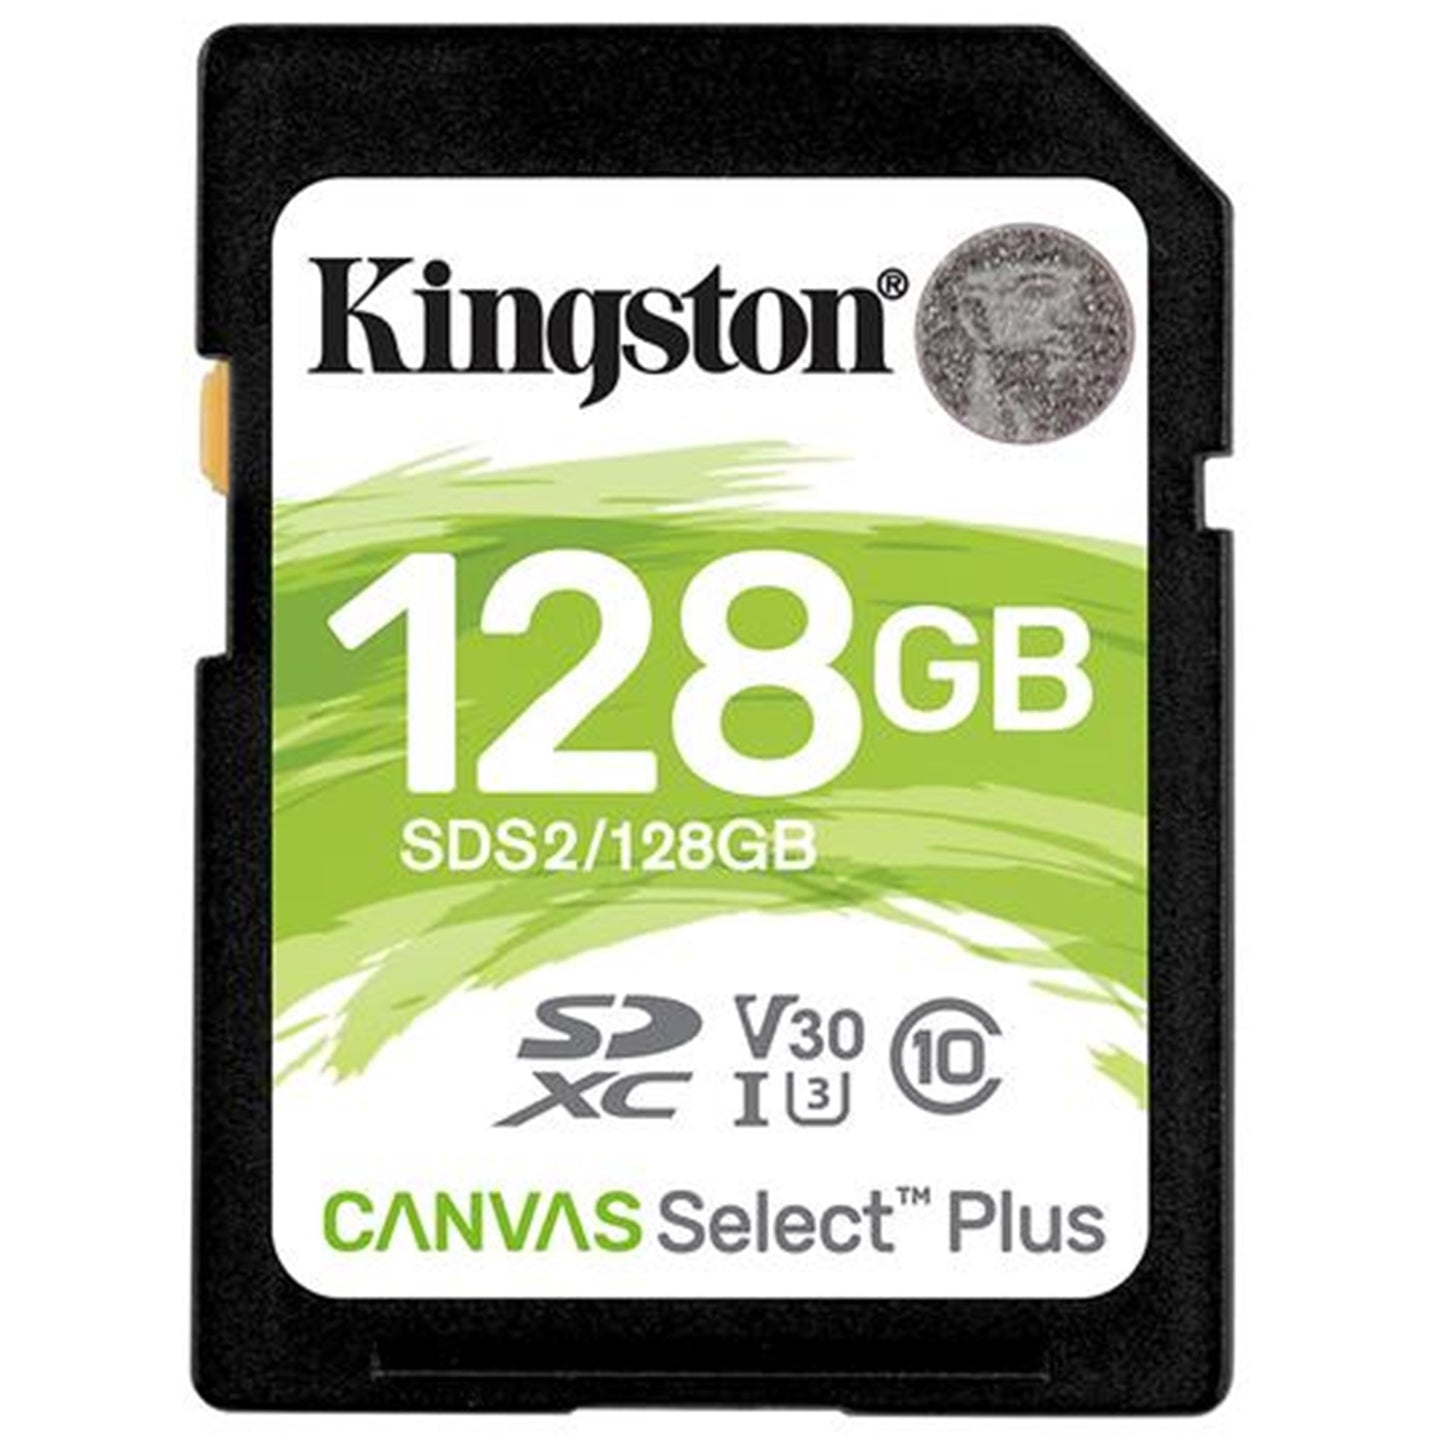 Kingston Canvas Select PlusV30 128GB SD Class 10 UHS-I U3 Flash Card